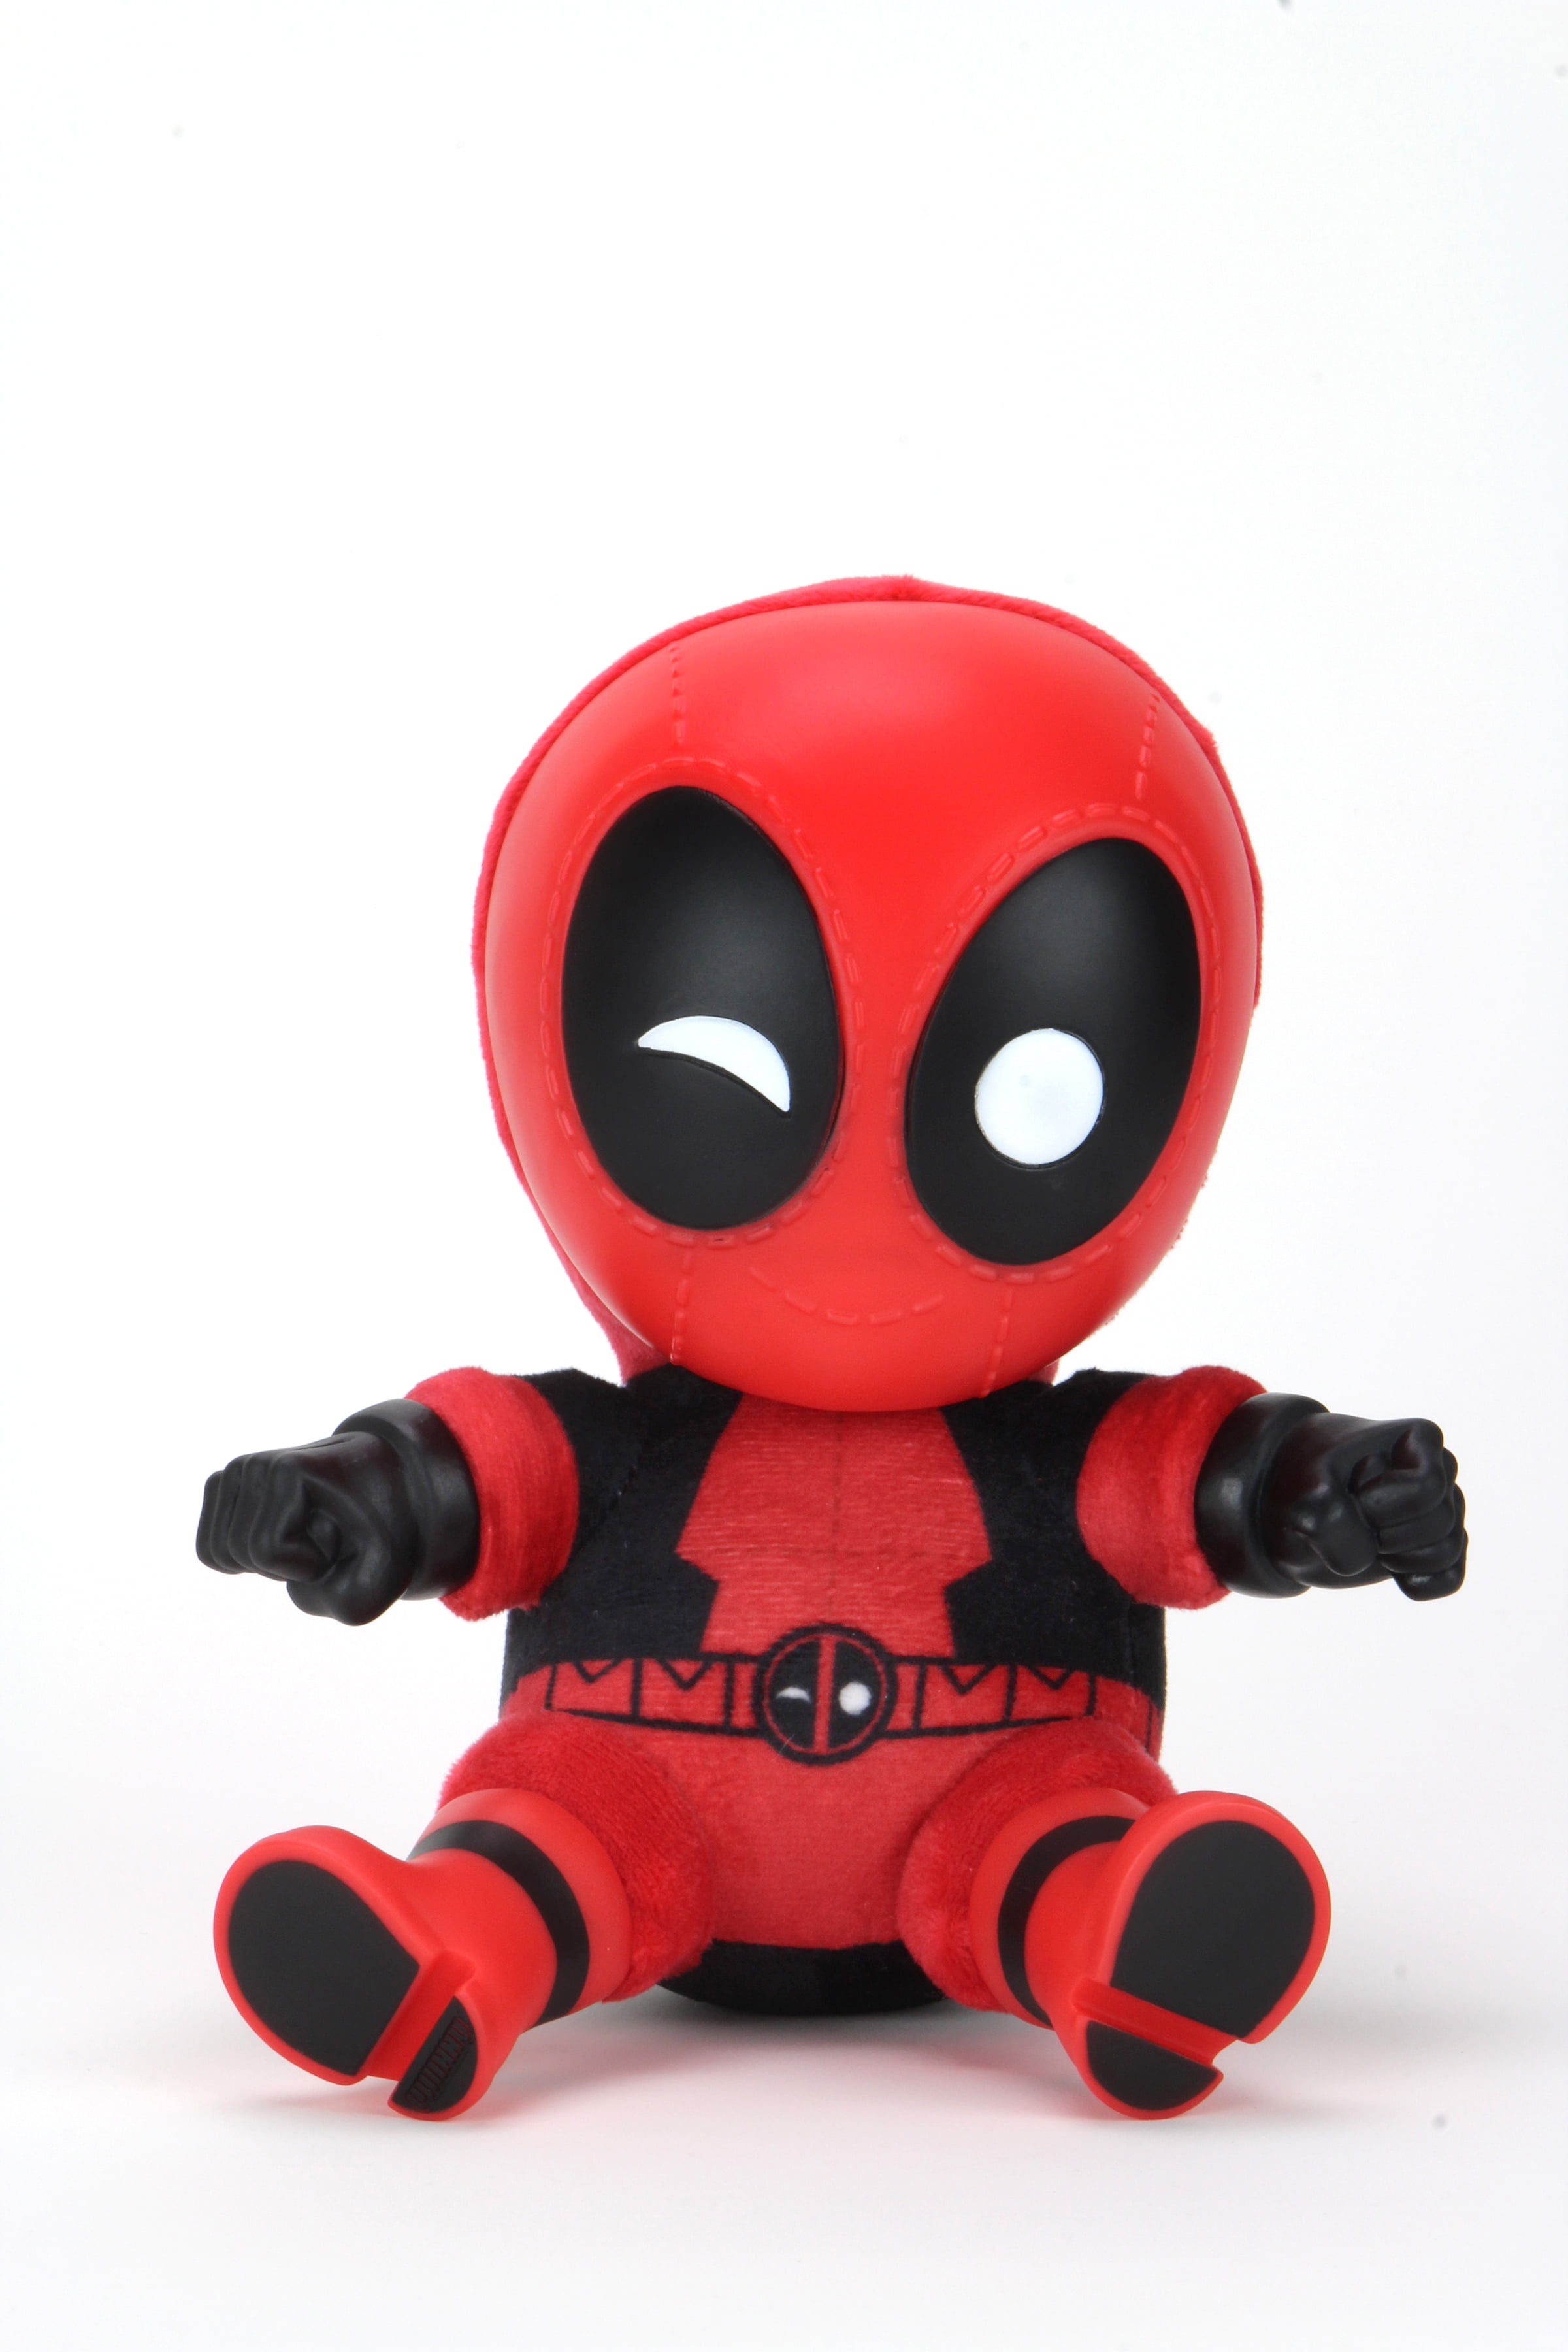 Deadpool Action Figure Models Toys Kids Gift Baseball Caps Movie Comics Plush 